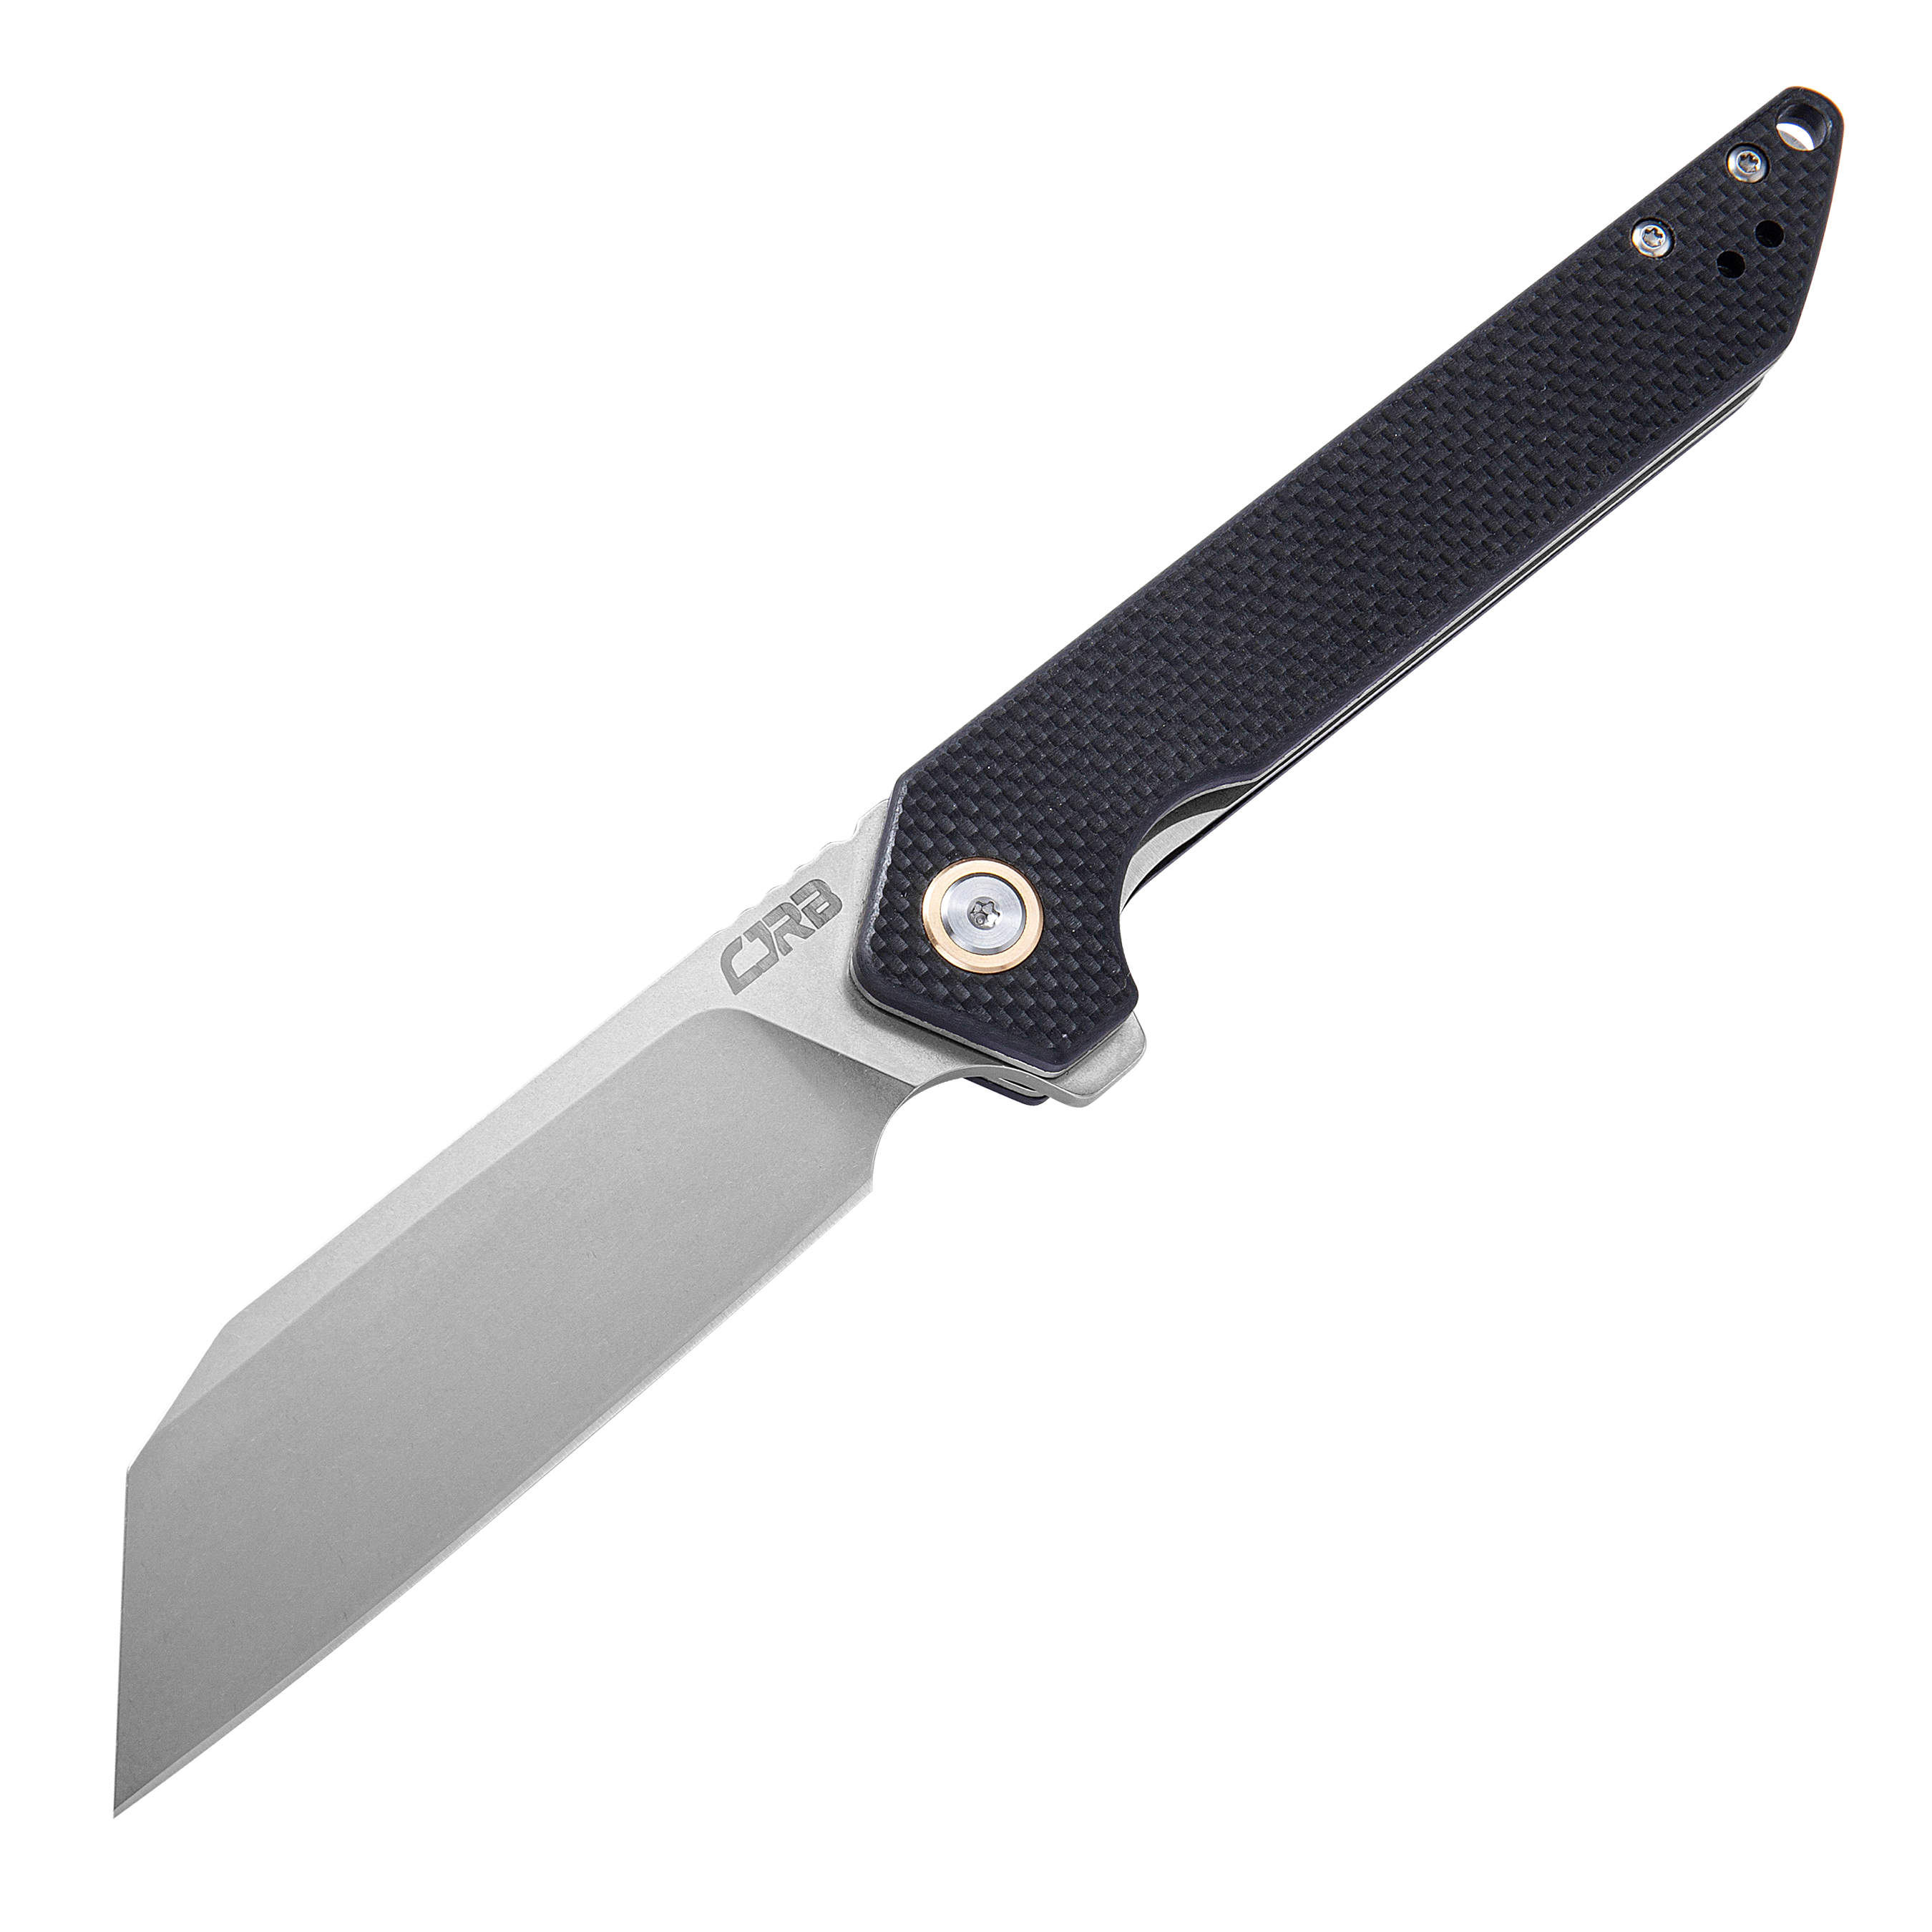 CJRB Rampart J1907 D2/AR-RPM9 Blade G10 Handle Folding Knives